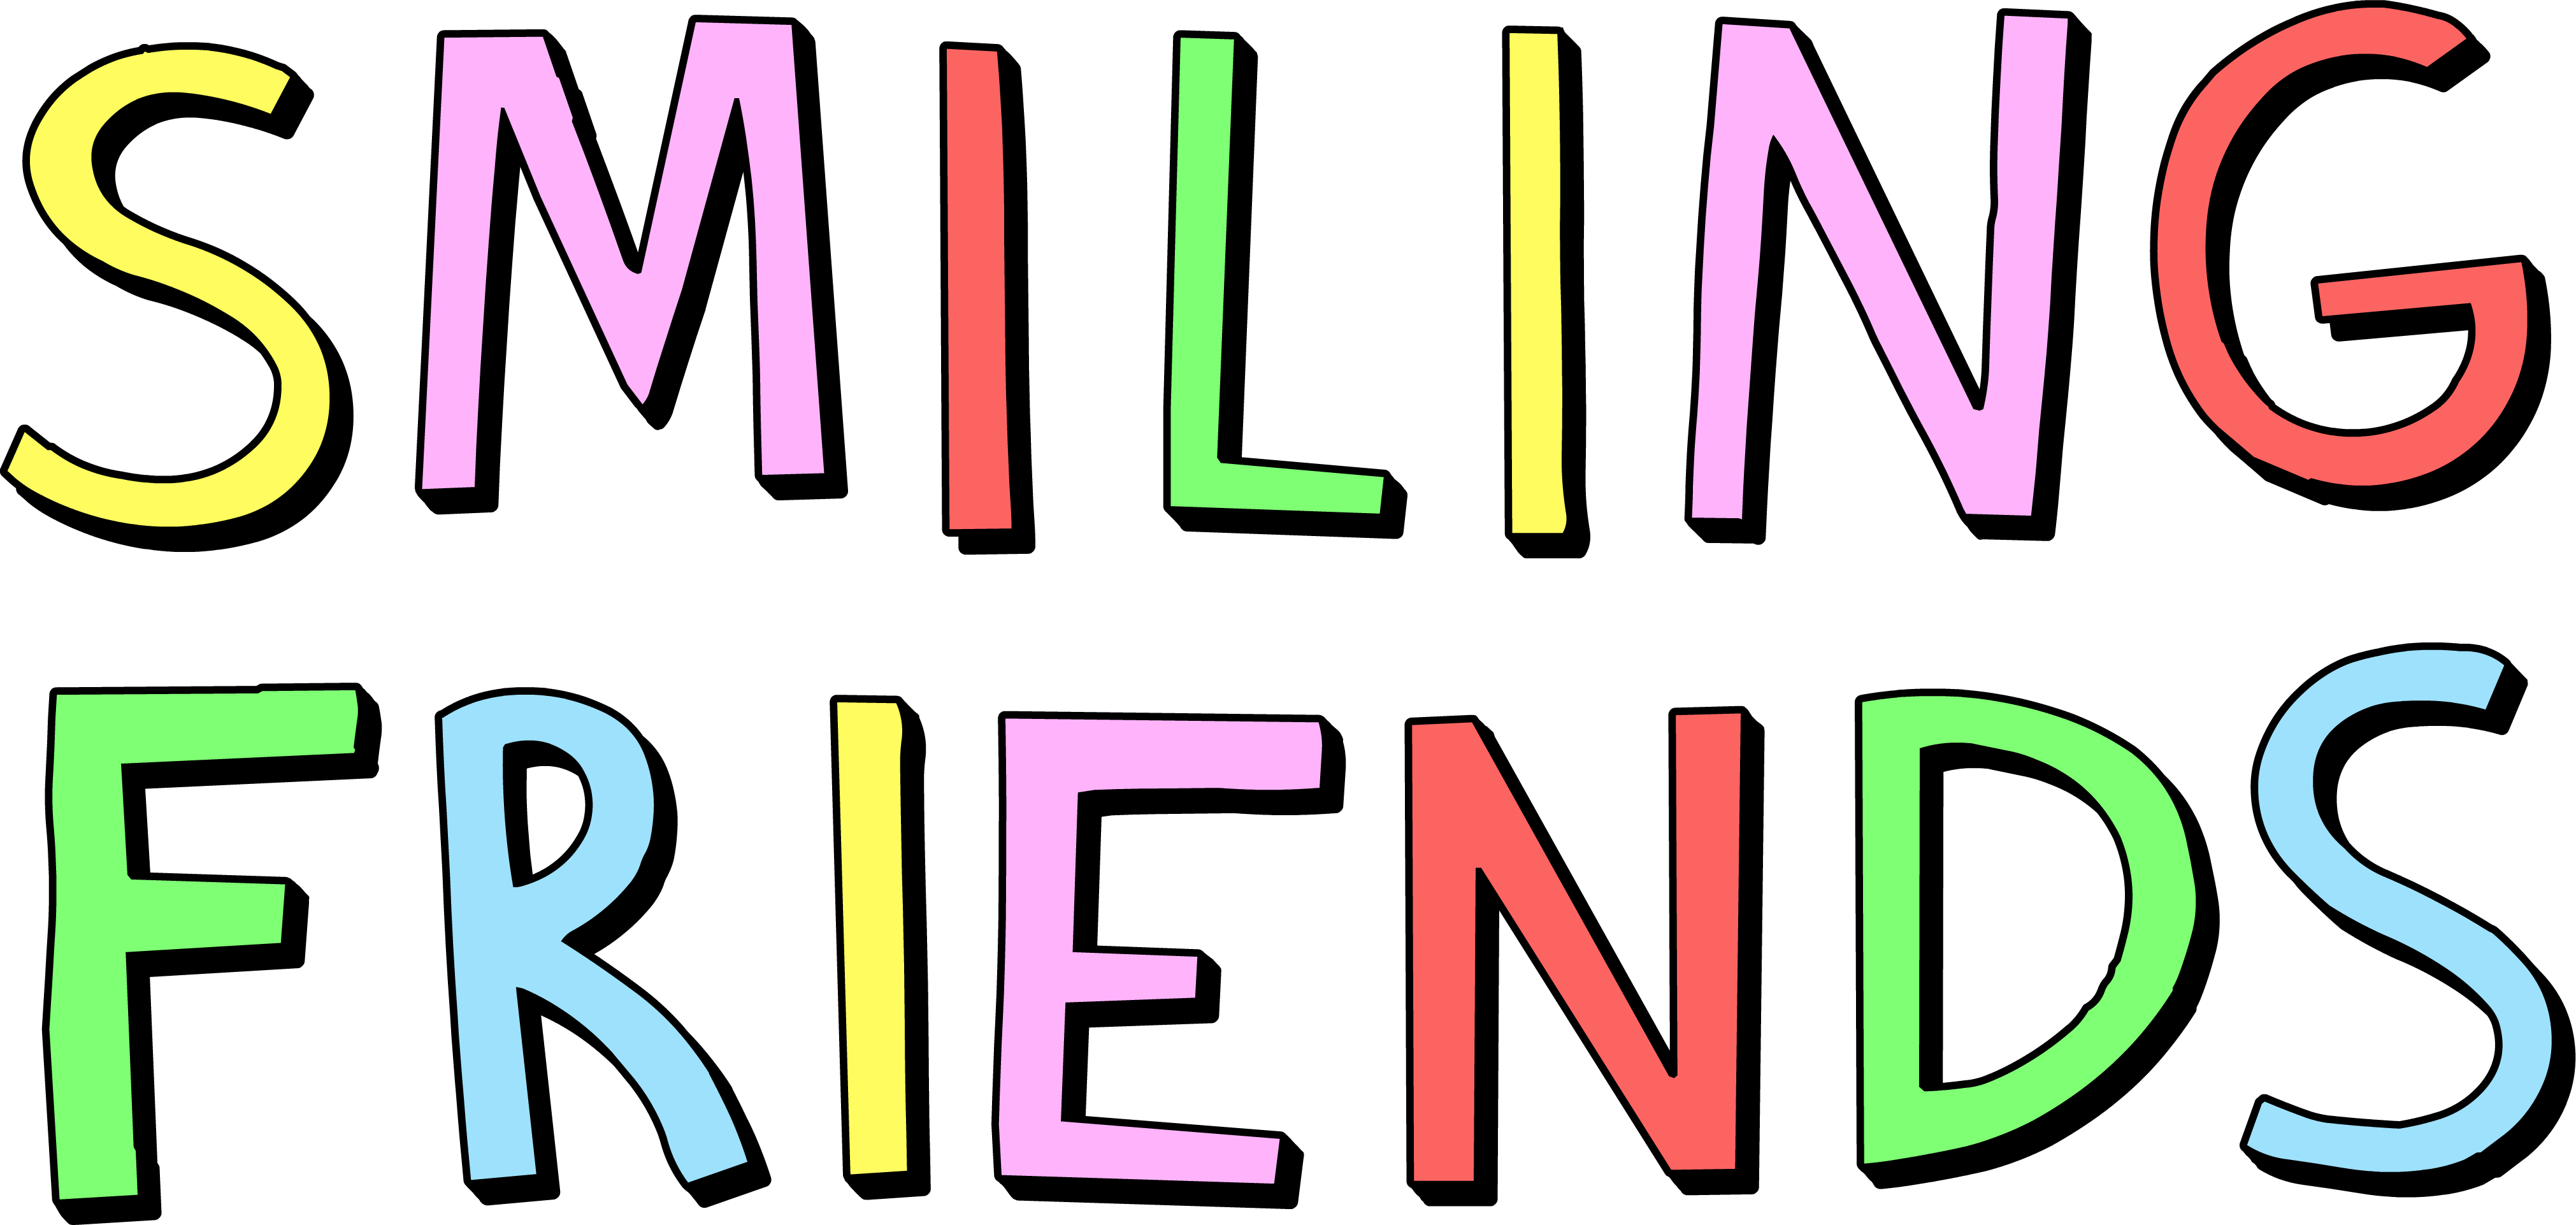 Smiling Friends (TV Series 2020– ) - IMDb